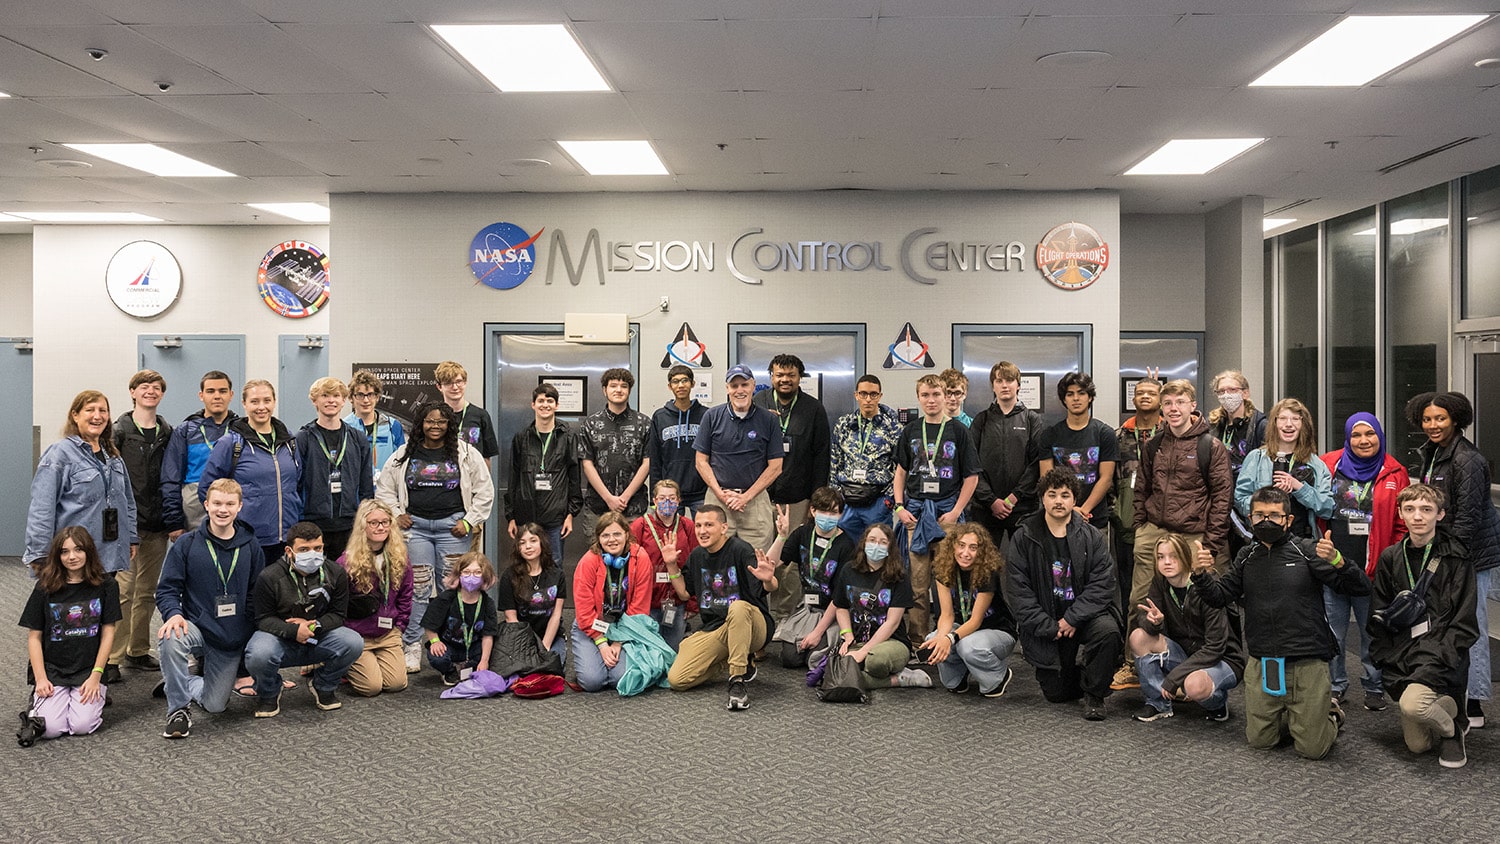 The Catalyst group at NASA's Mission Control Center. Photo courtesy of NASA.